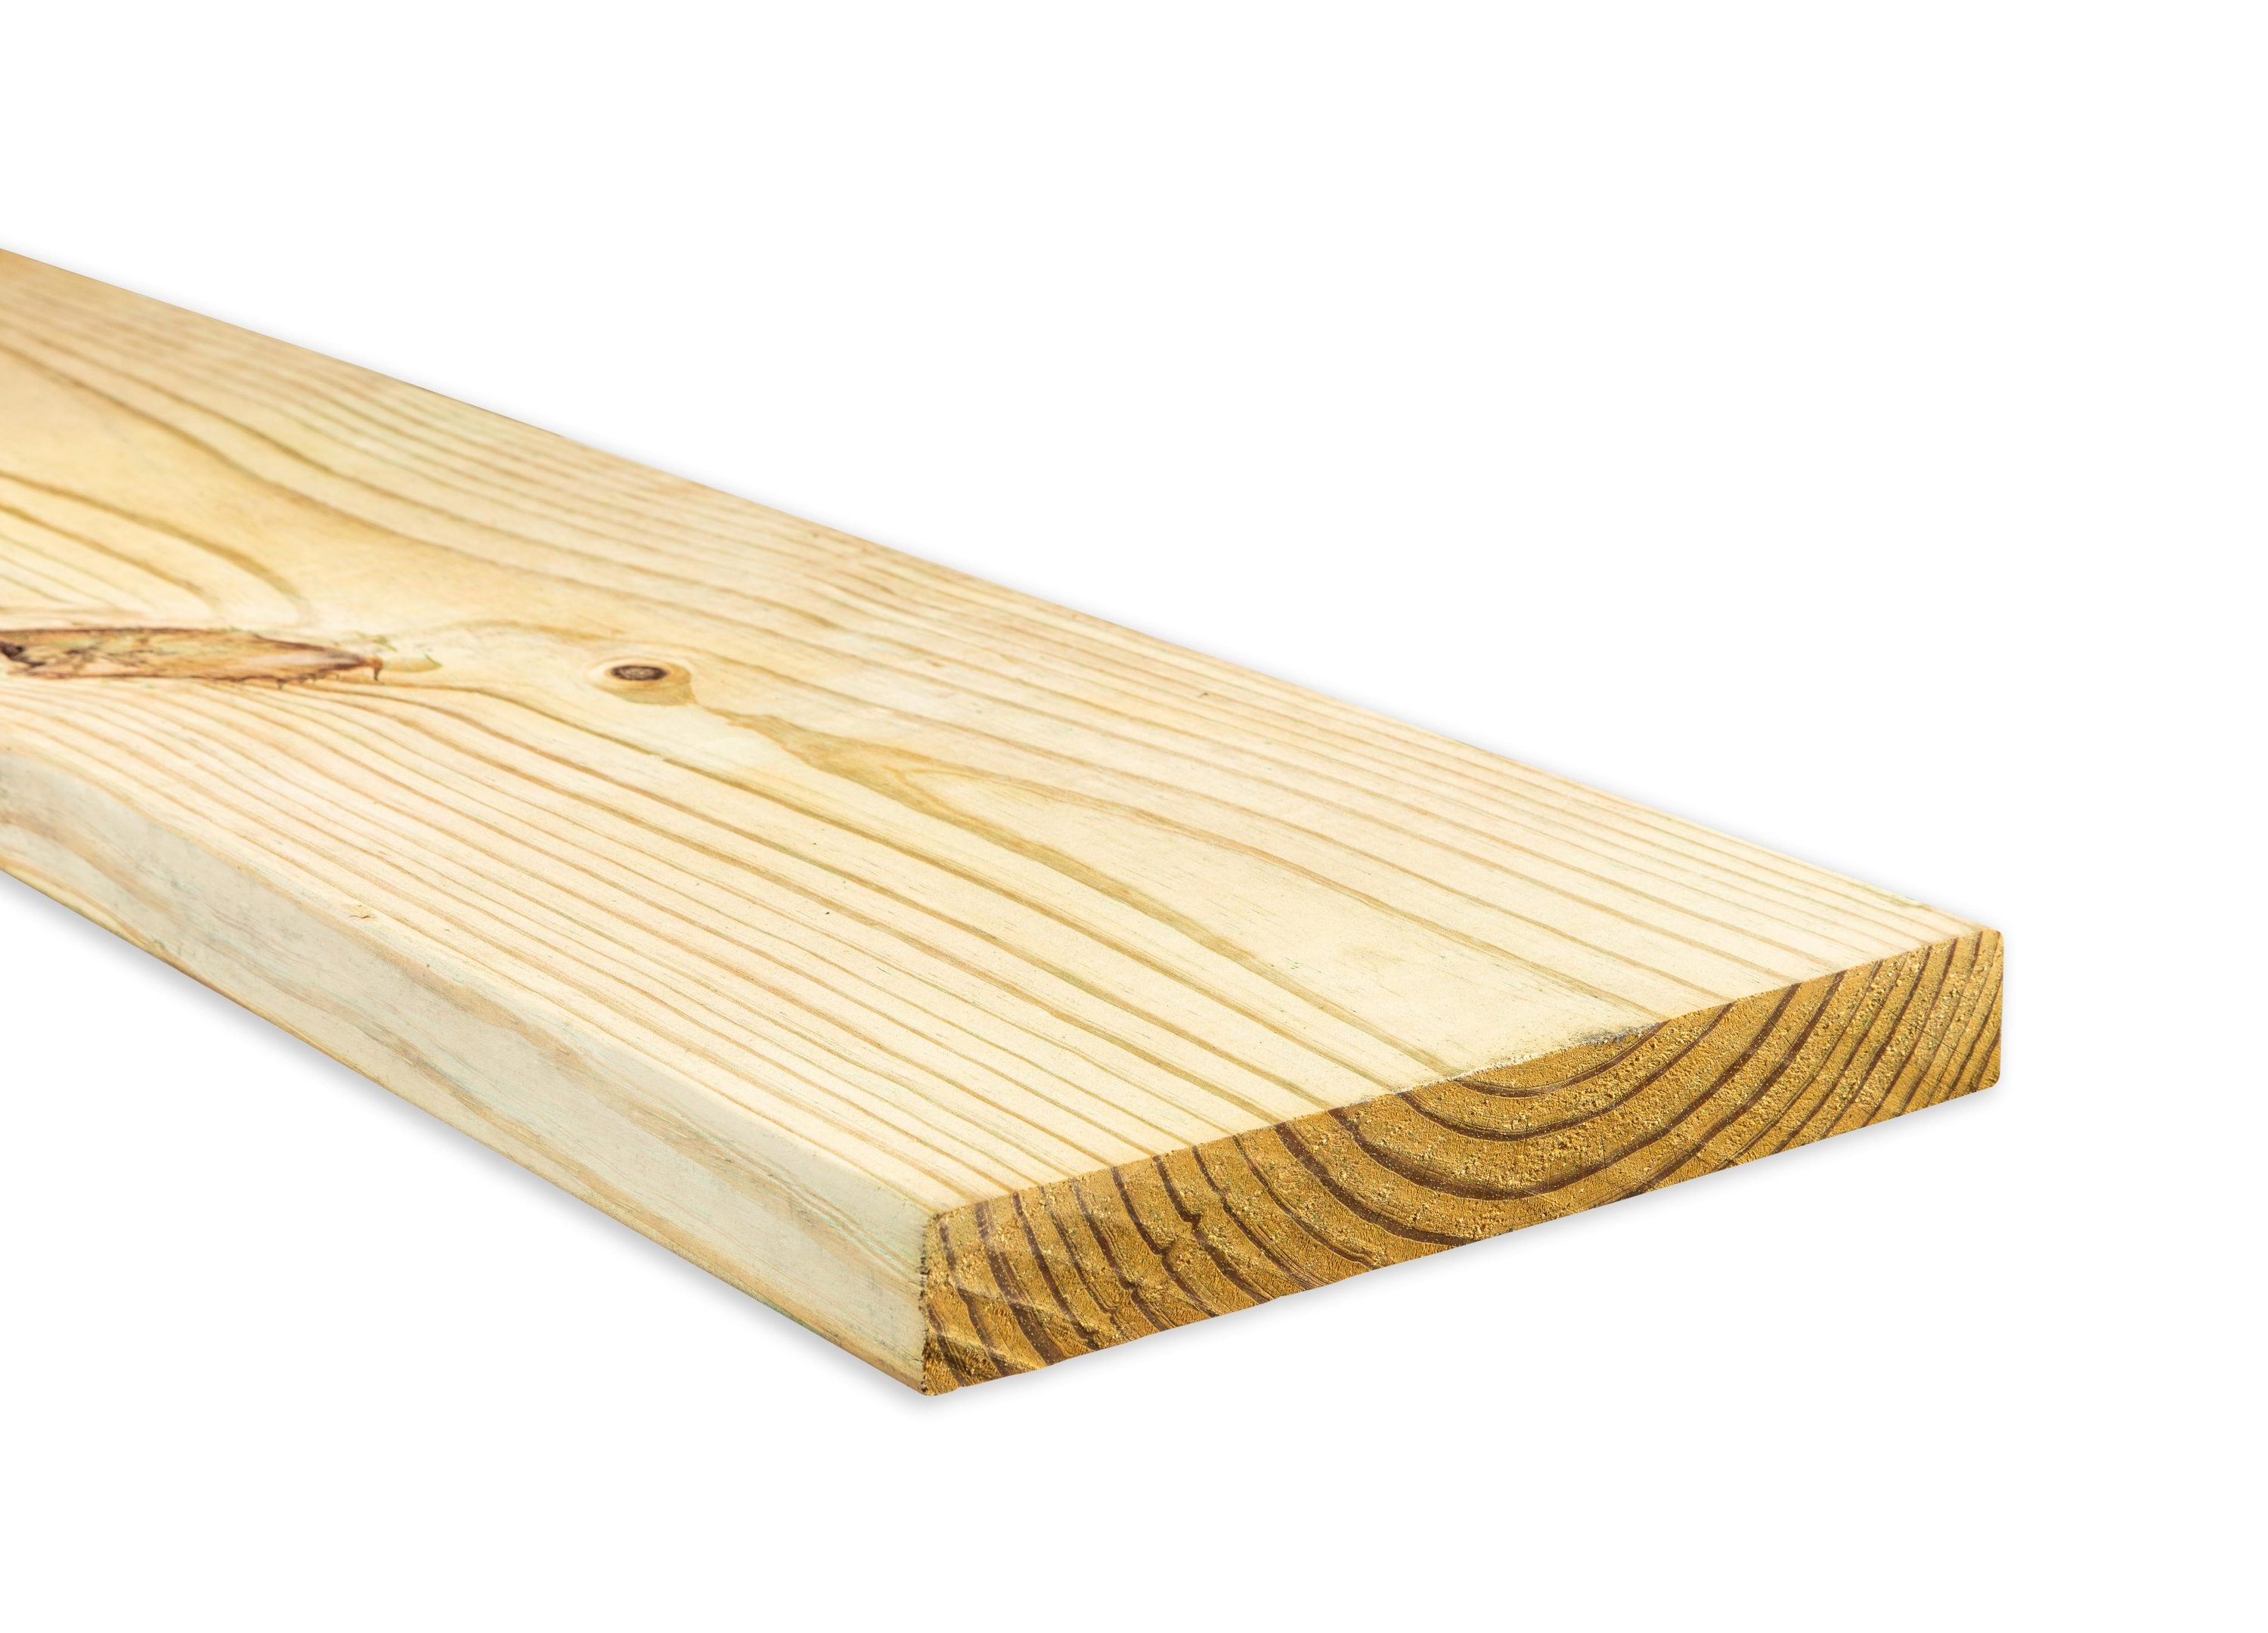 Hardwood Lumber & Composites at